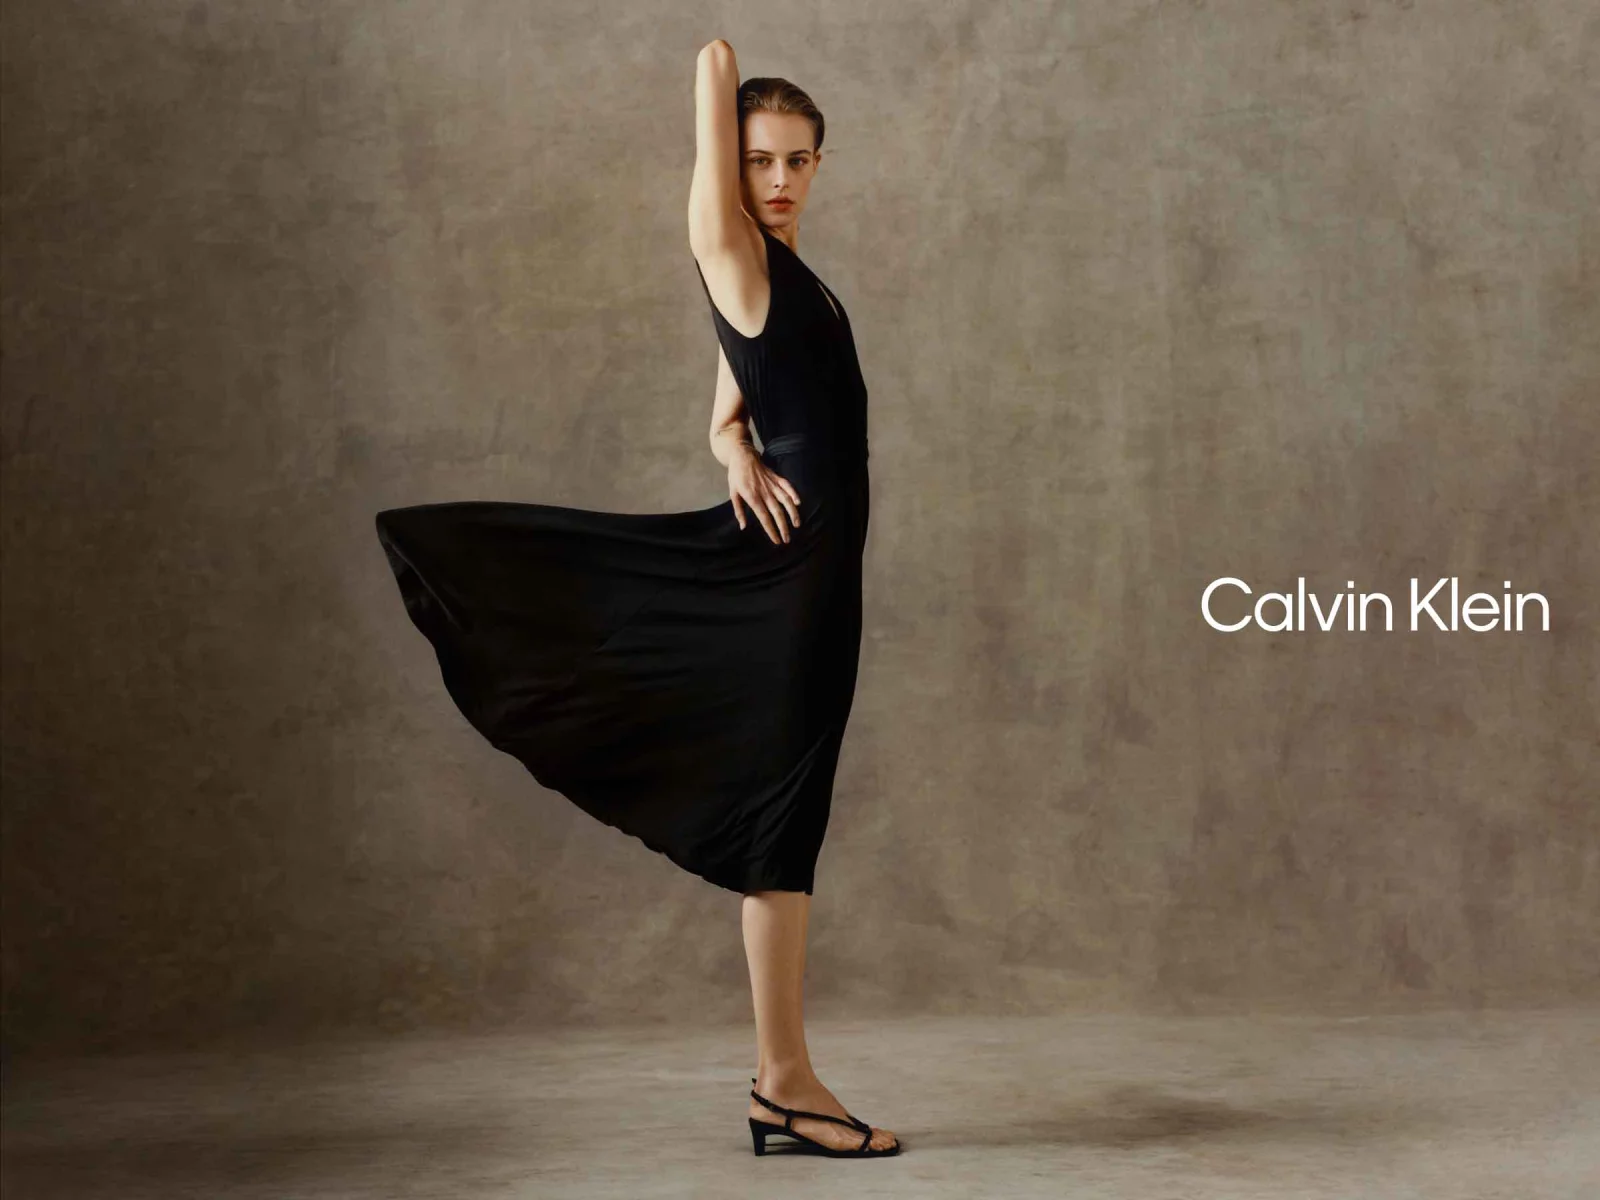 Calvin Klein 4 by Paul Maximilian SCHLOSSER